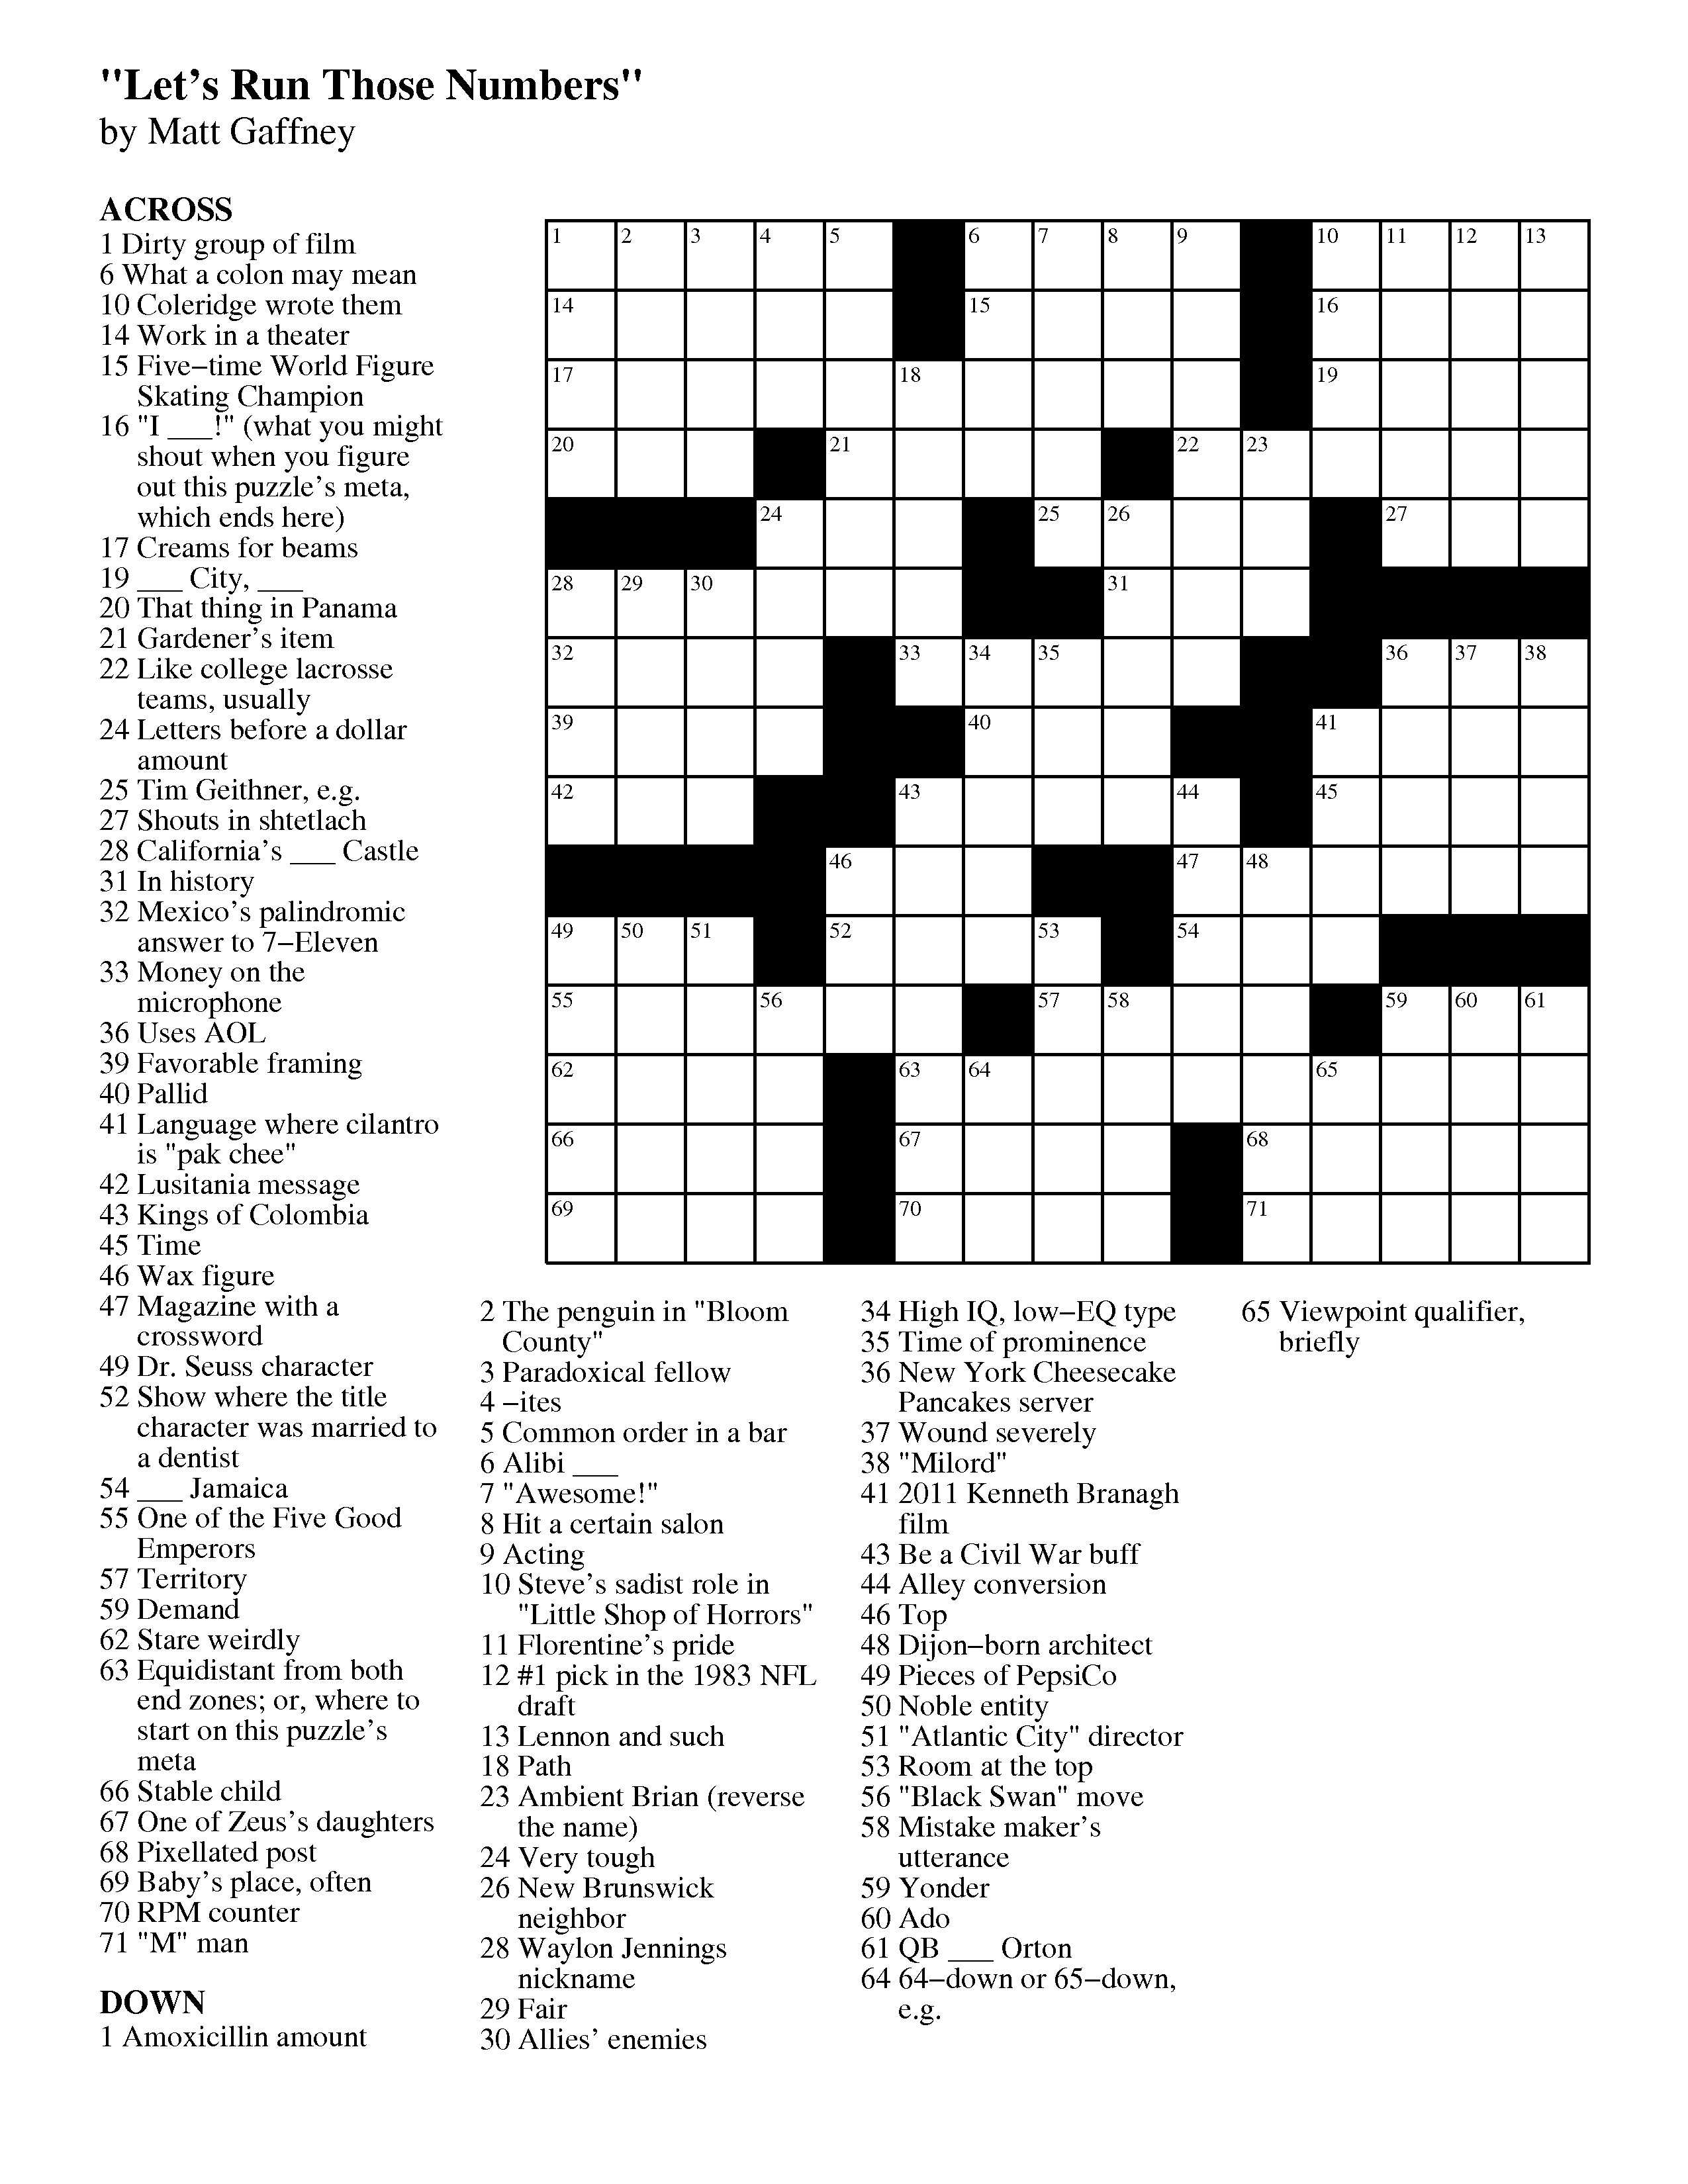 October 2012 Matt Gaffney s Weekly Crossword Contest